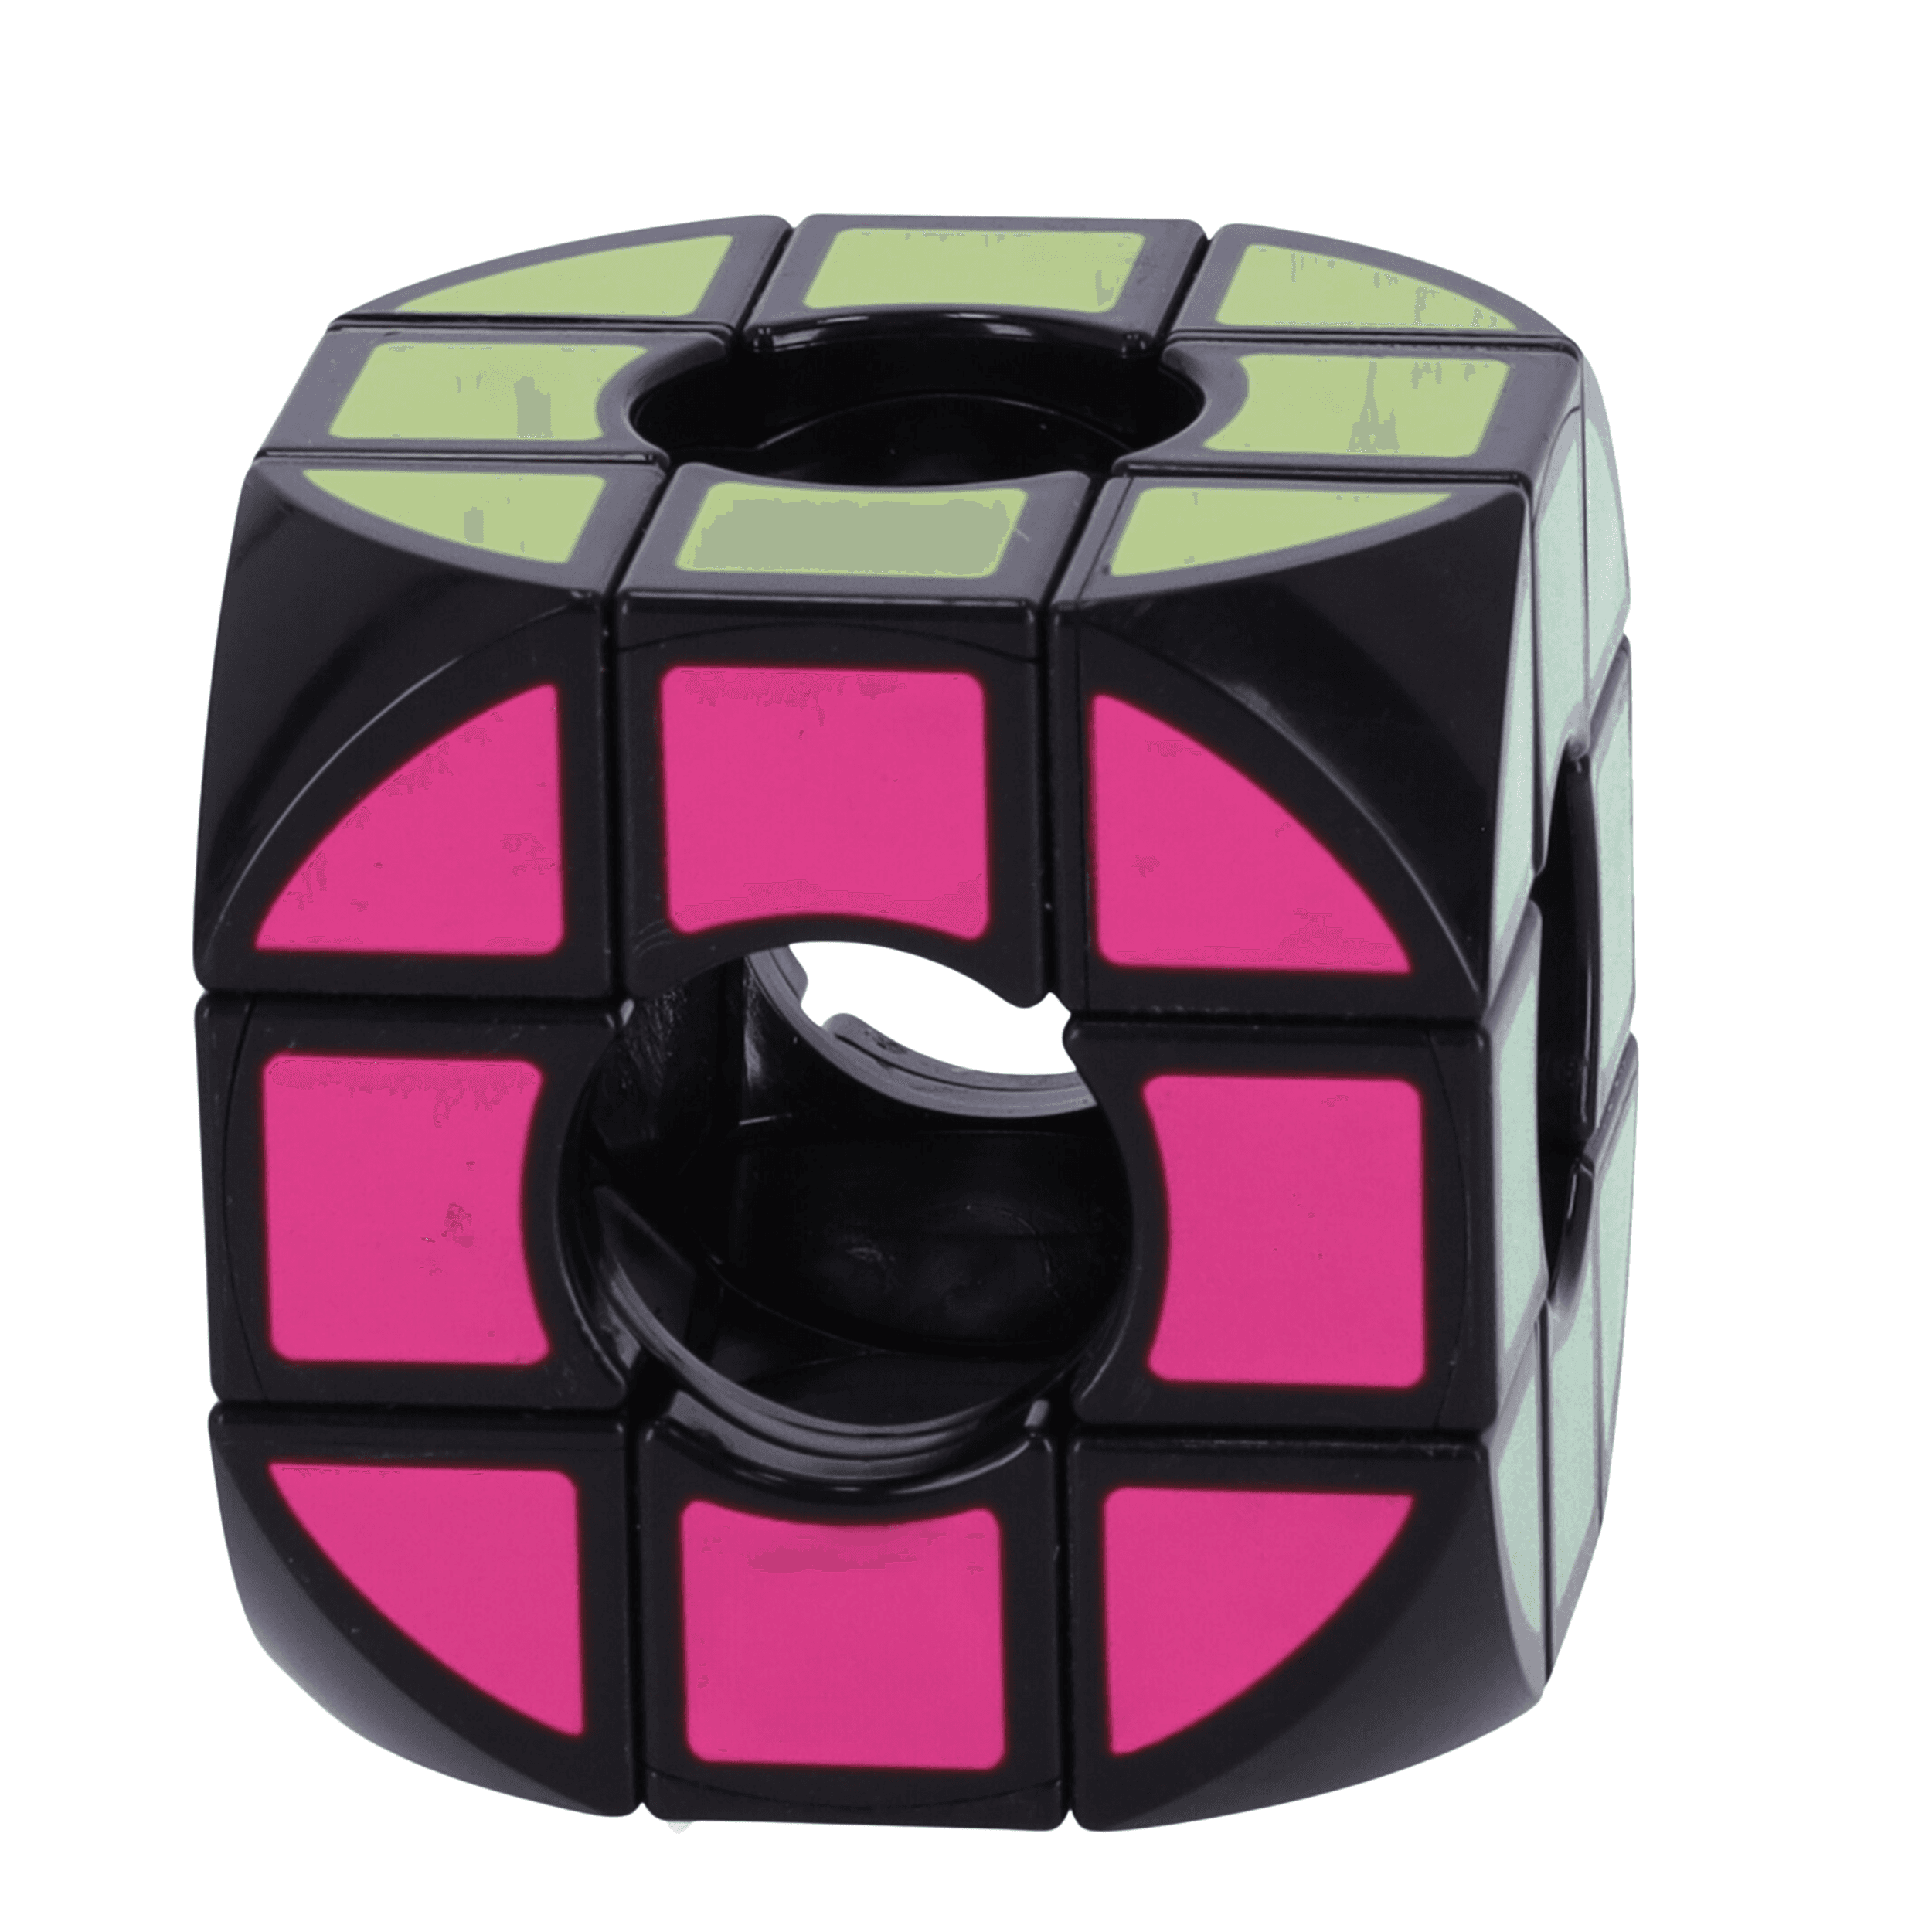 Modern jigsaw puzzle, logic cube, Rubik's Cube - Void, type II